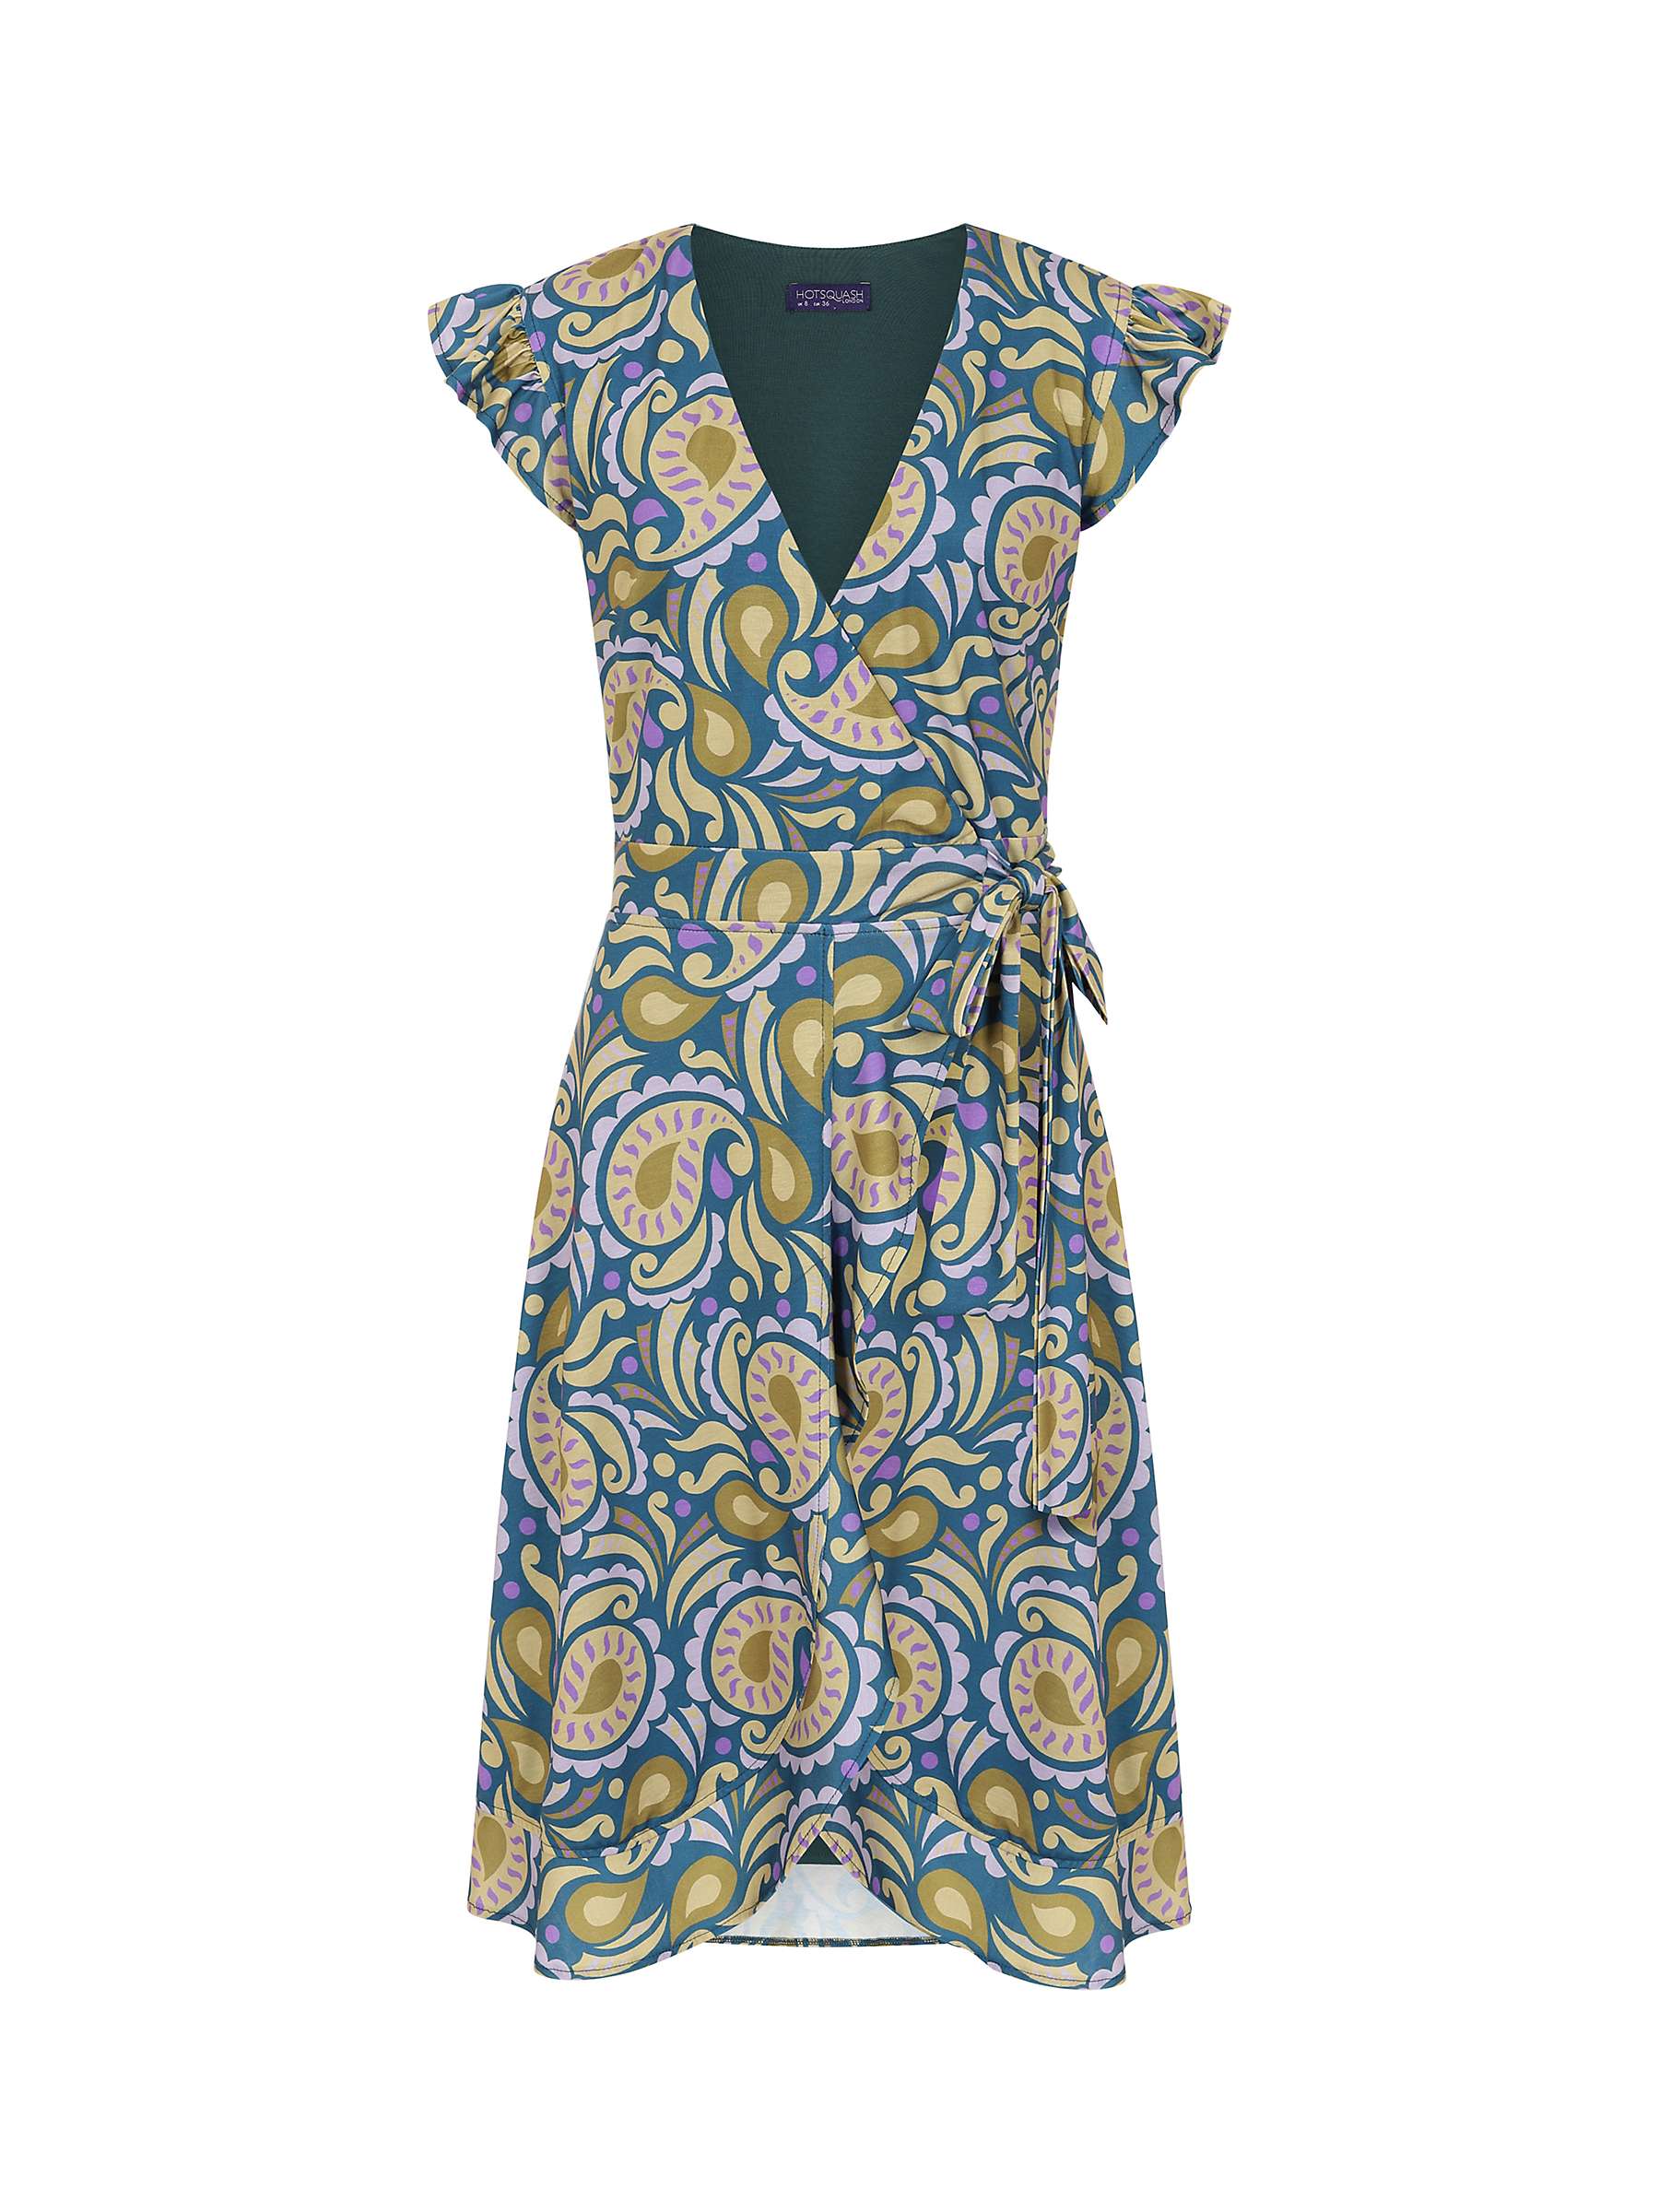 Buy HotSquash Waterfall Wrap Dress, Green/Navy Paisley Online at johnlewis.com